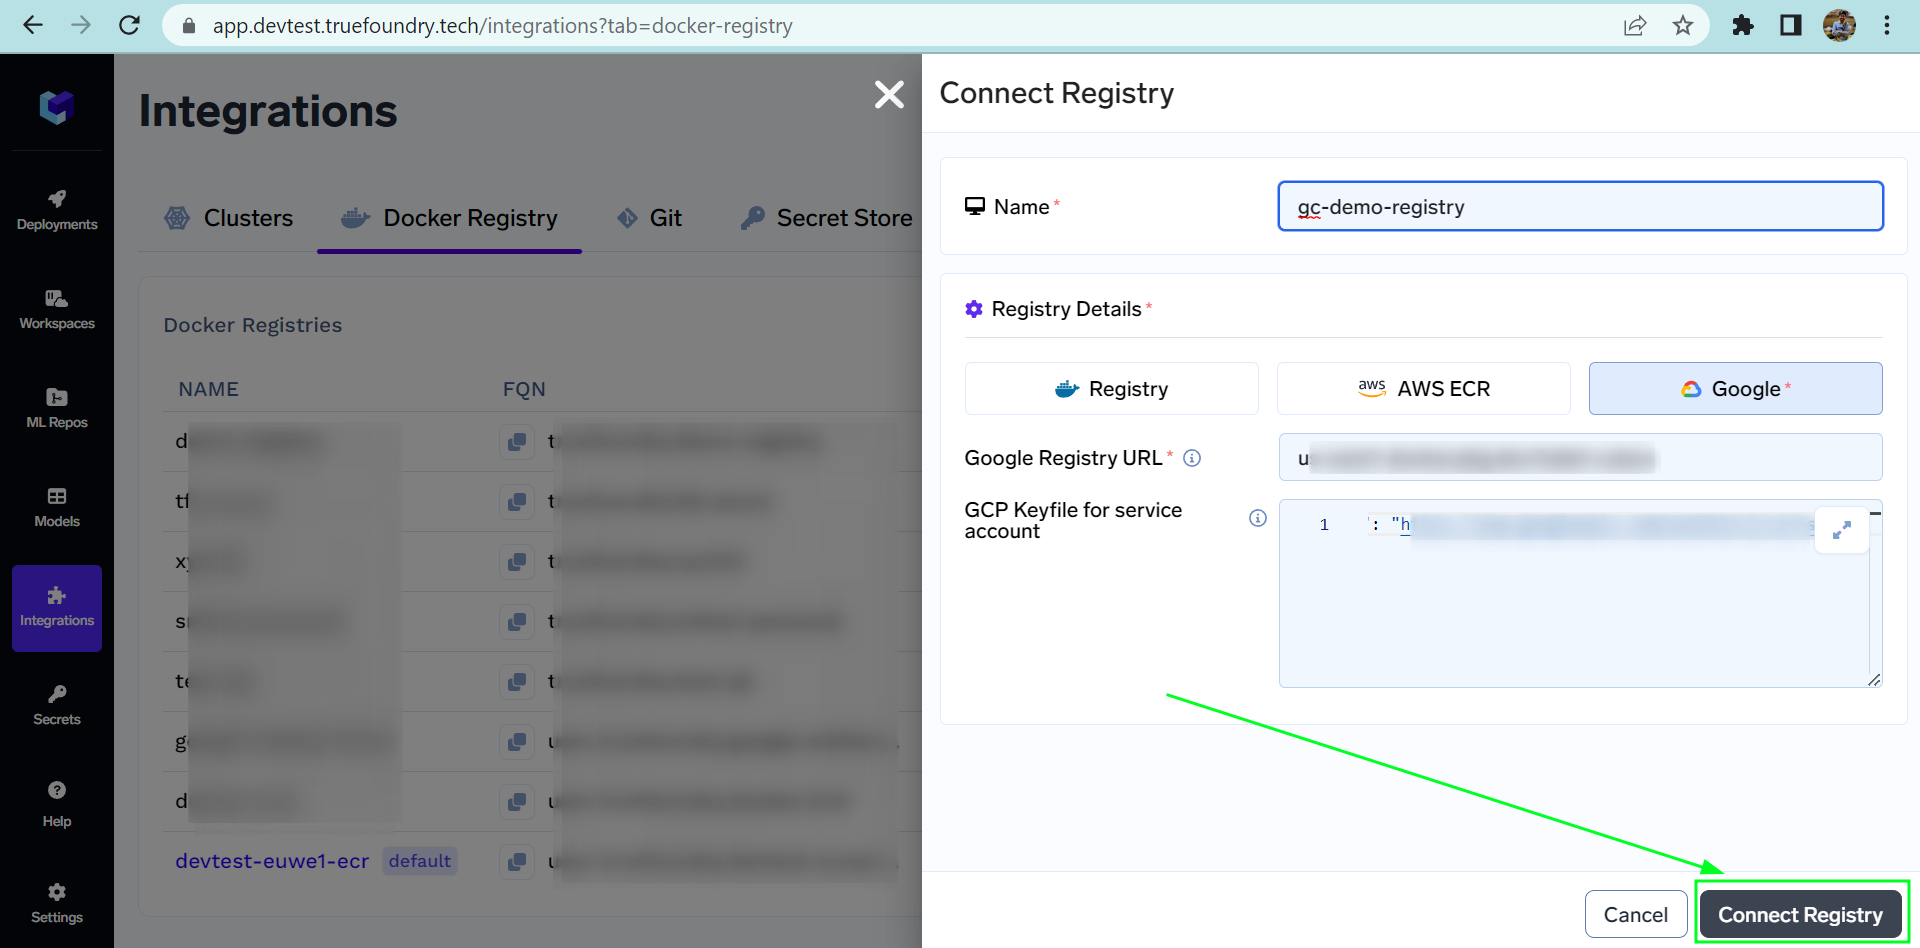 Google Container Registry

